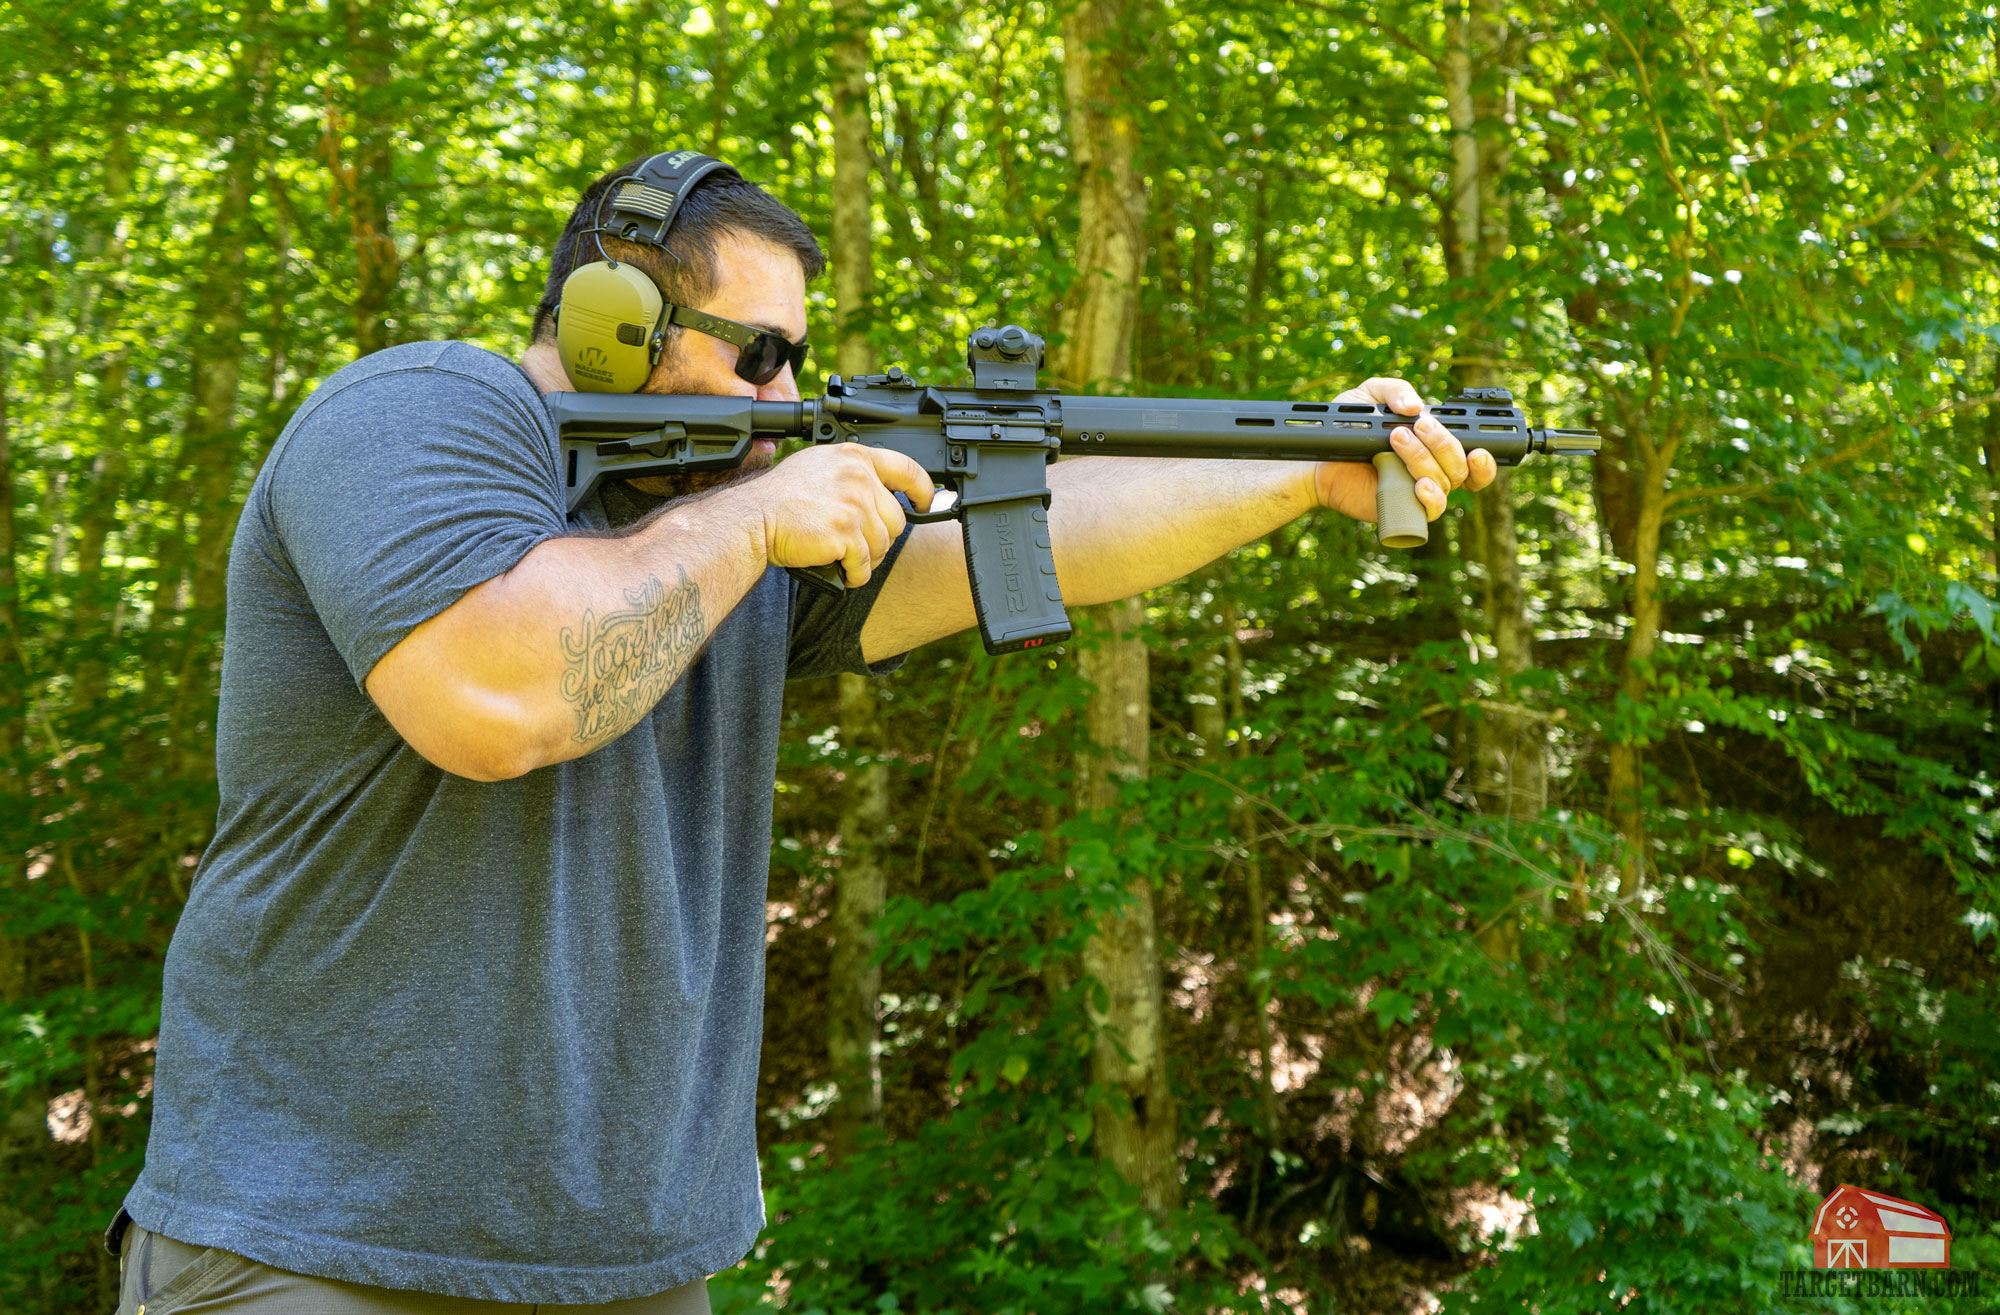 a man shooting one an ar-15 semi-automatic rifle